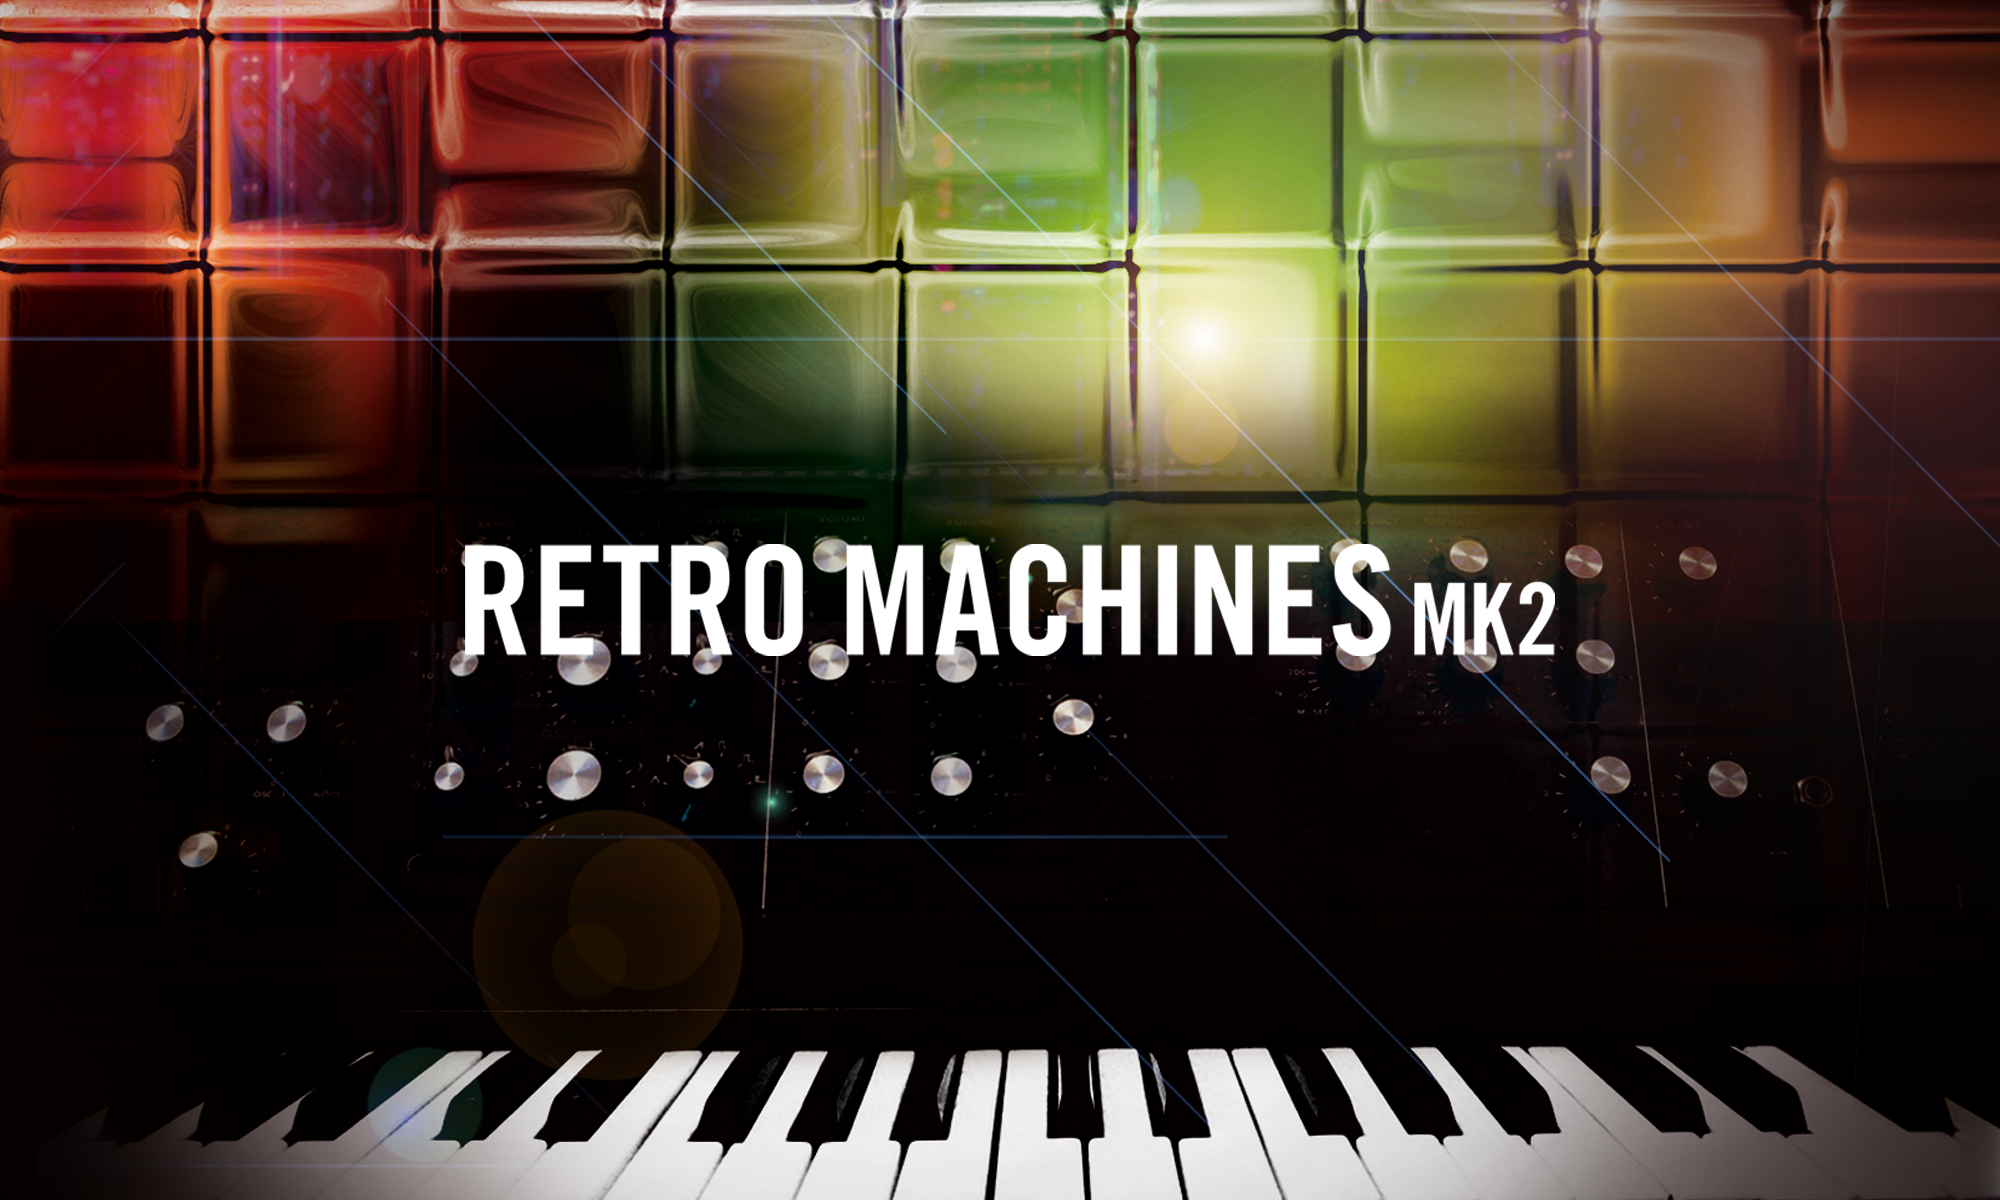 Retro-Machines-MK2-manual-cover-web-2000x1200px.png